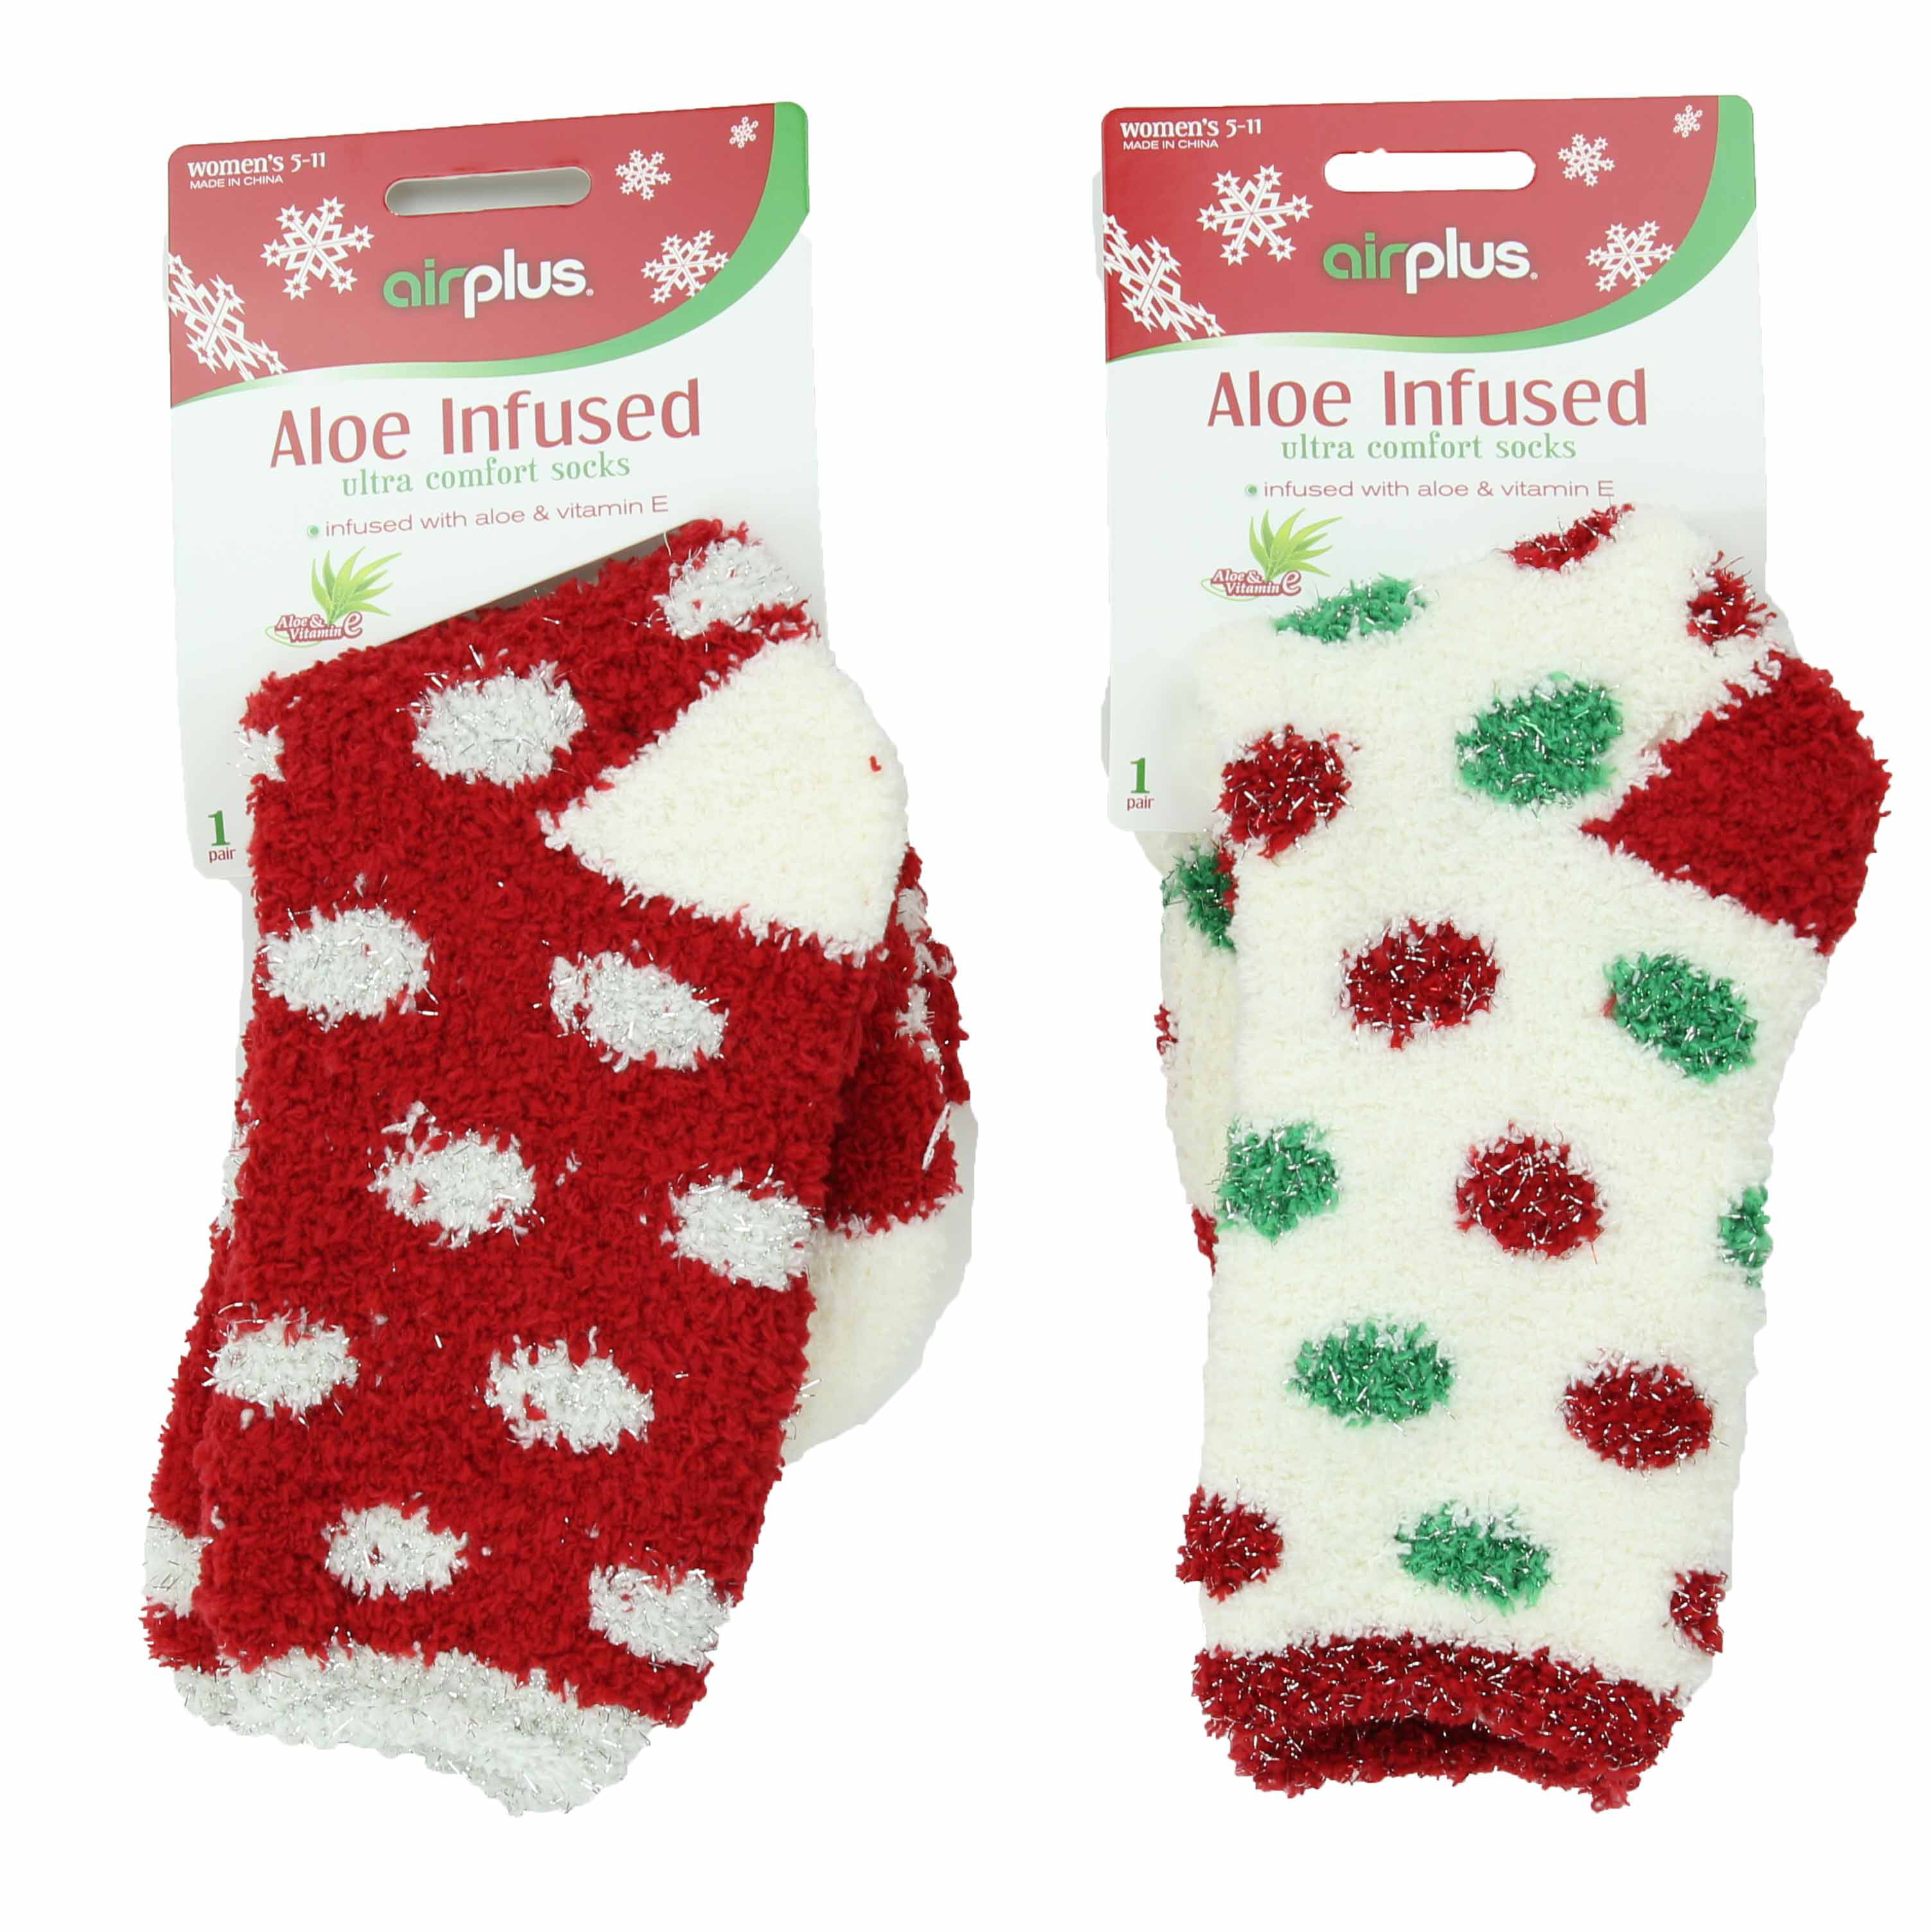 NEW!! Airplus Aloe Infused Womens Red W/Llama Moisturizing Socks Size 5-11.